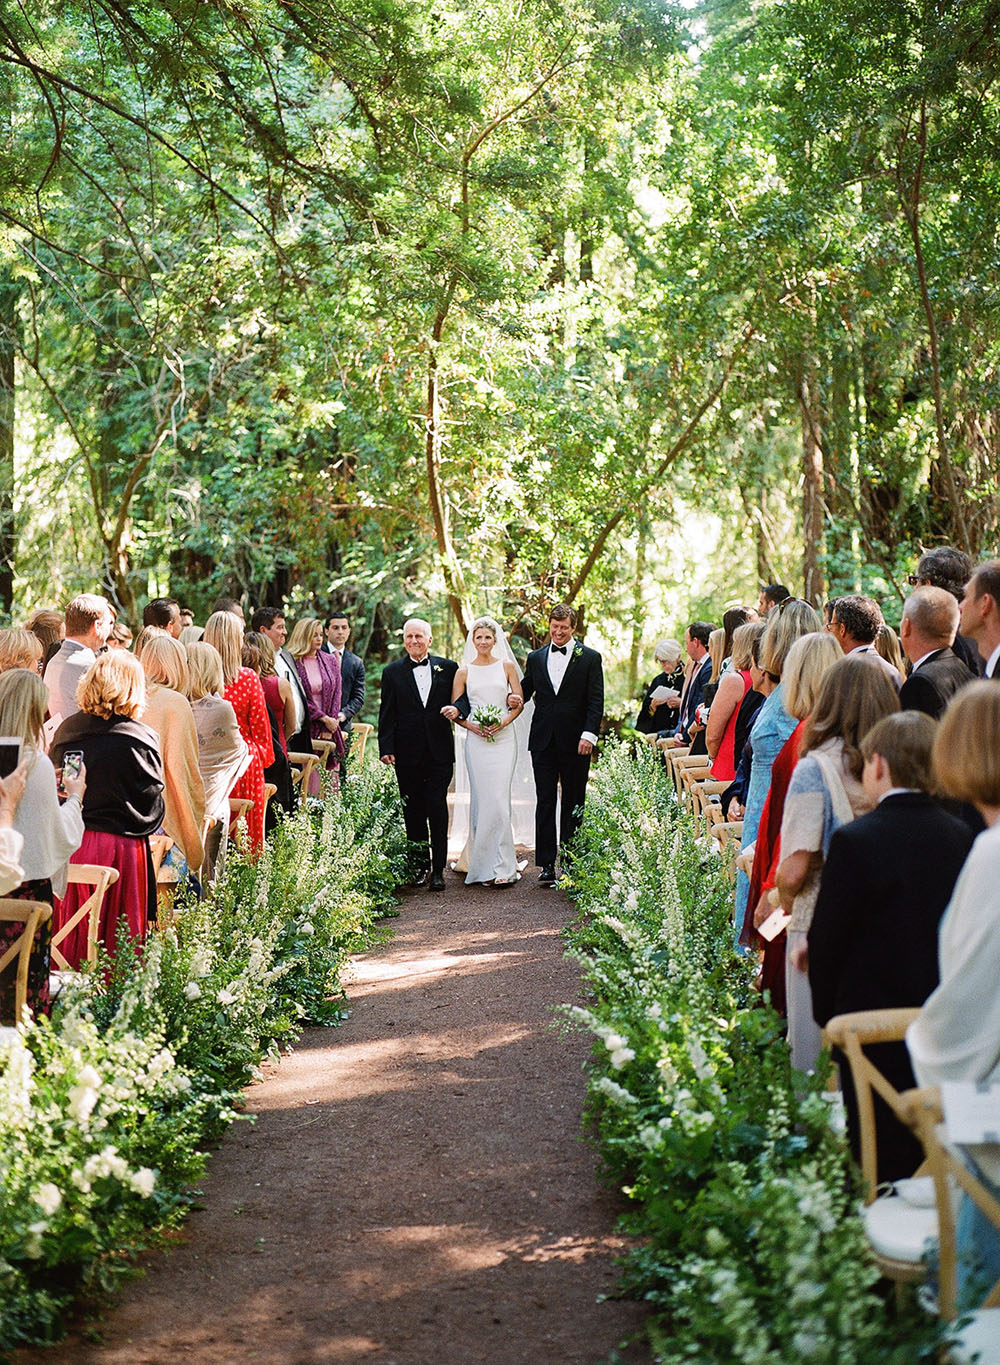 Elegant green and white wedding at Santa Lucia Preserve